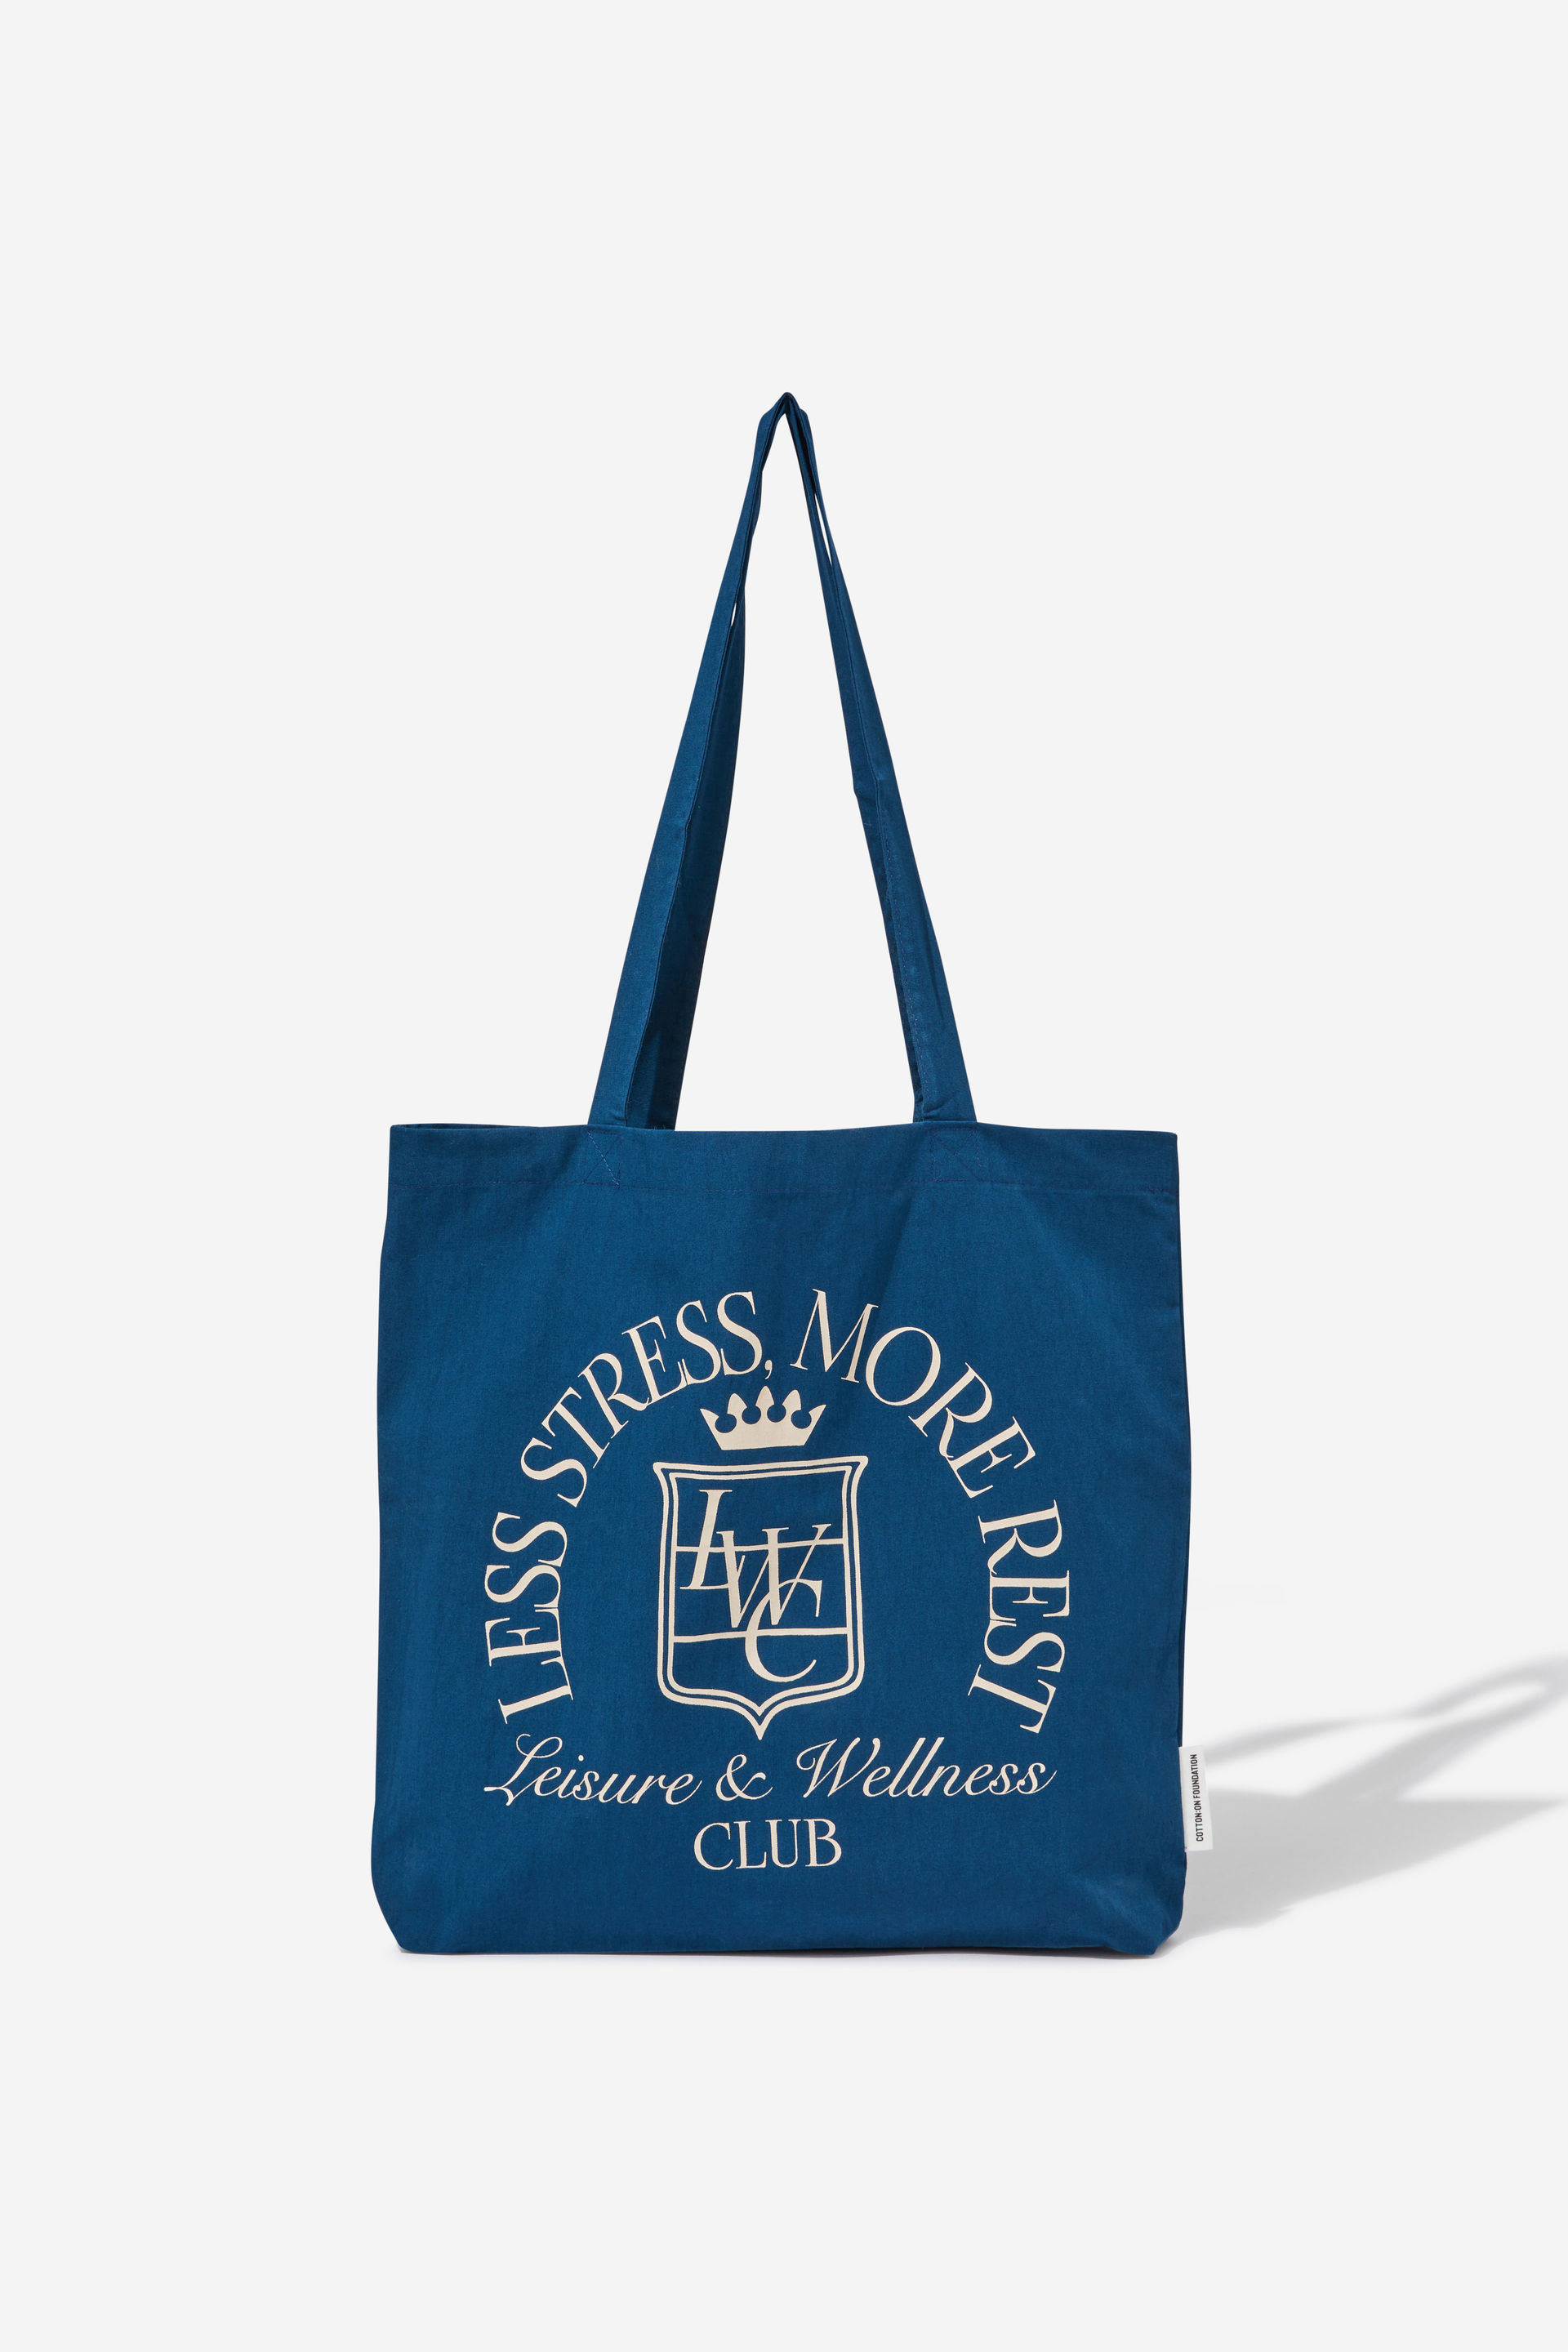 Cotton On Foundation - Foundation Typo Tote Bag - Stress less club/navy